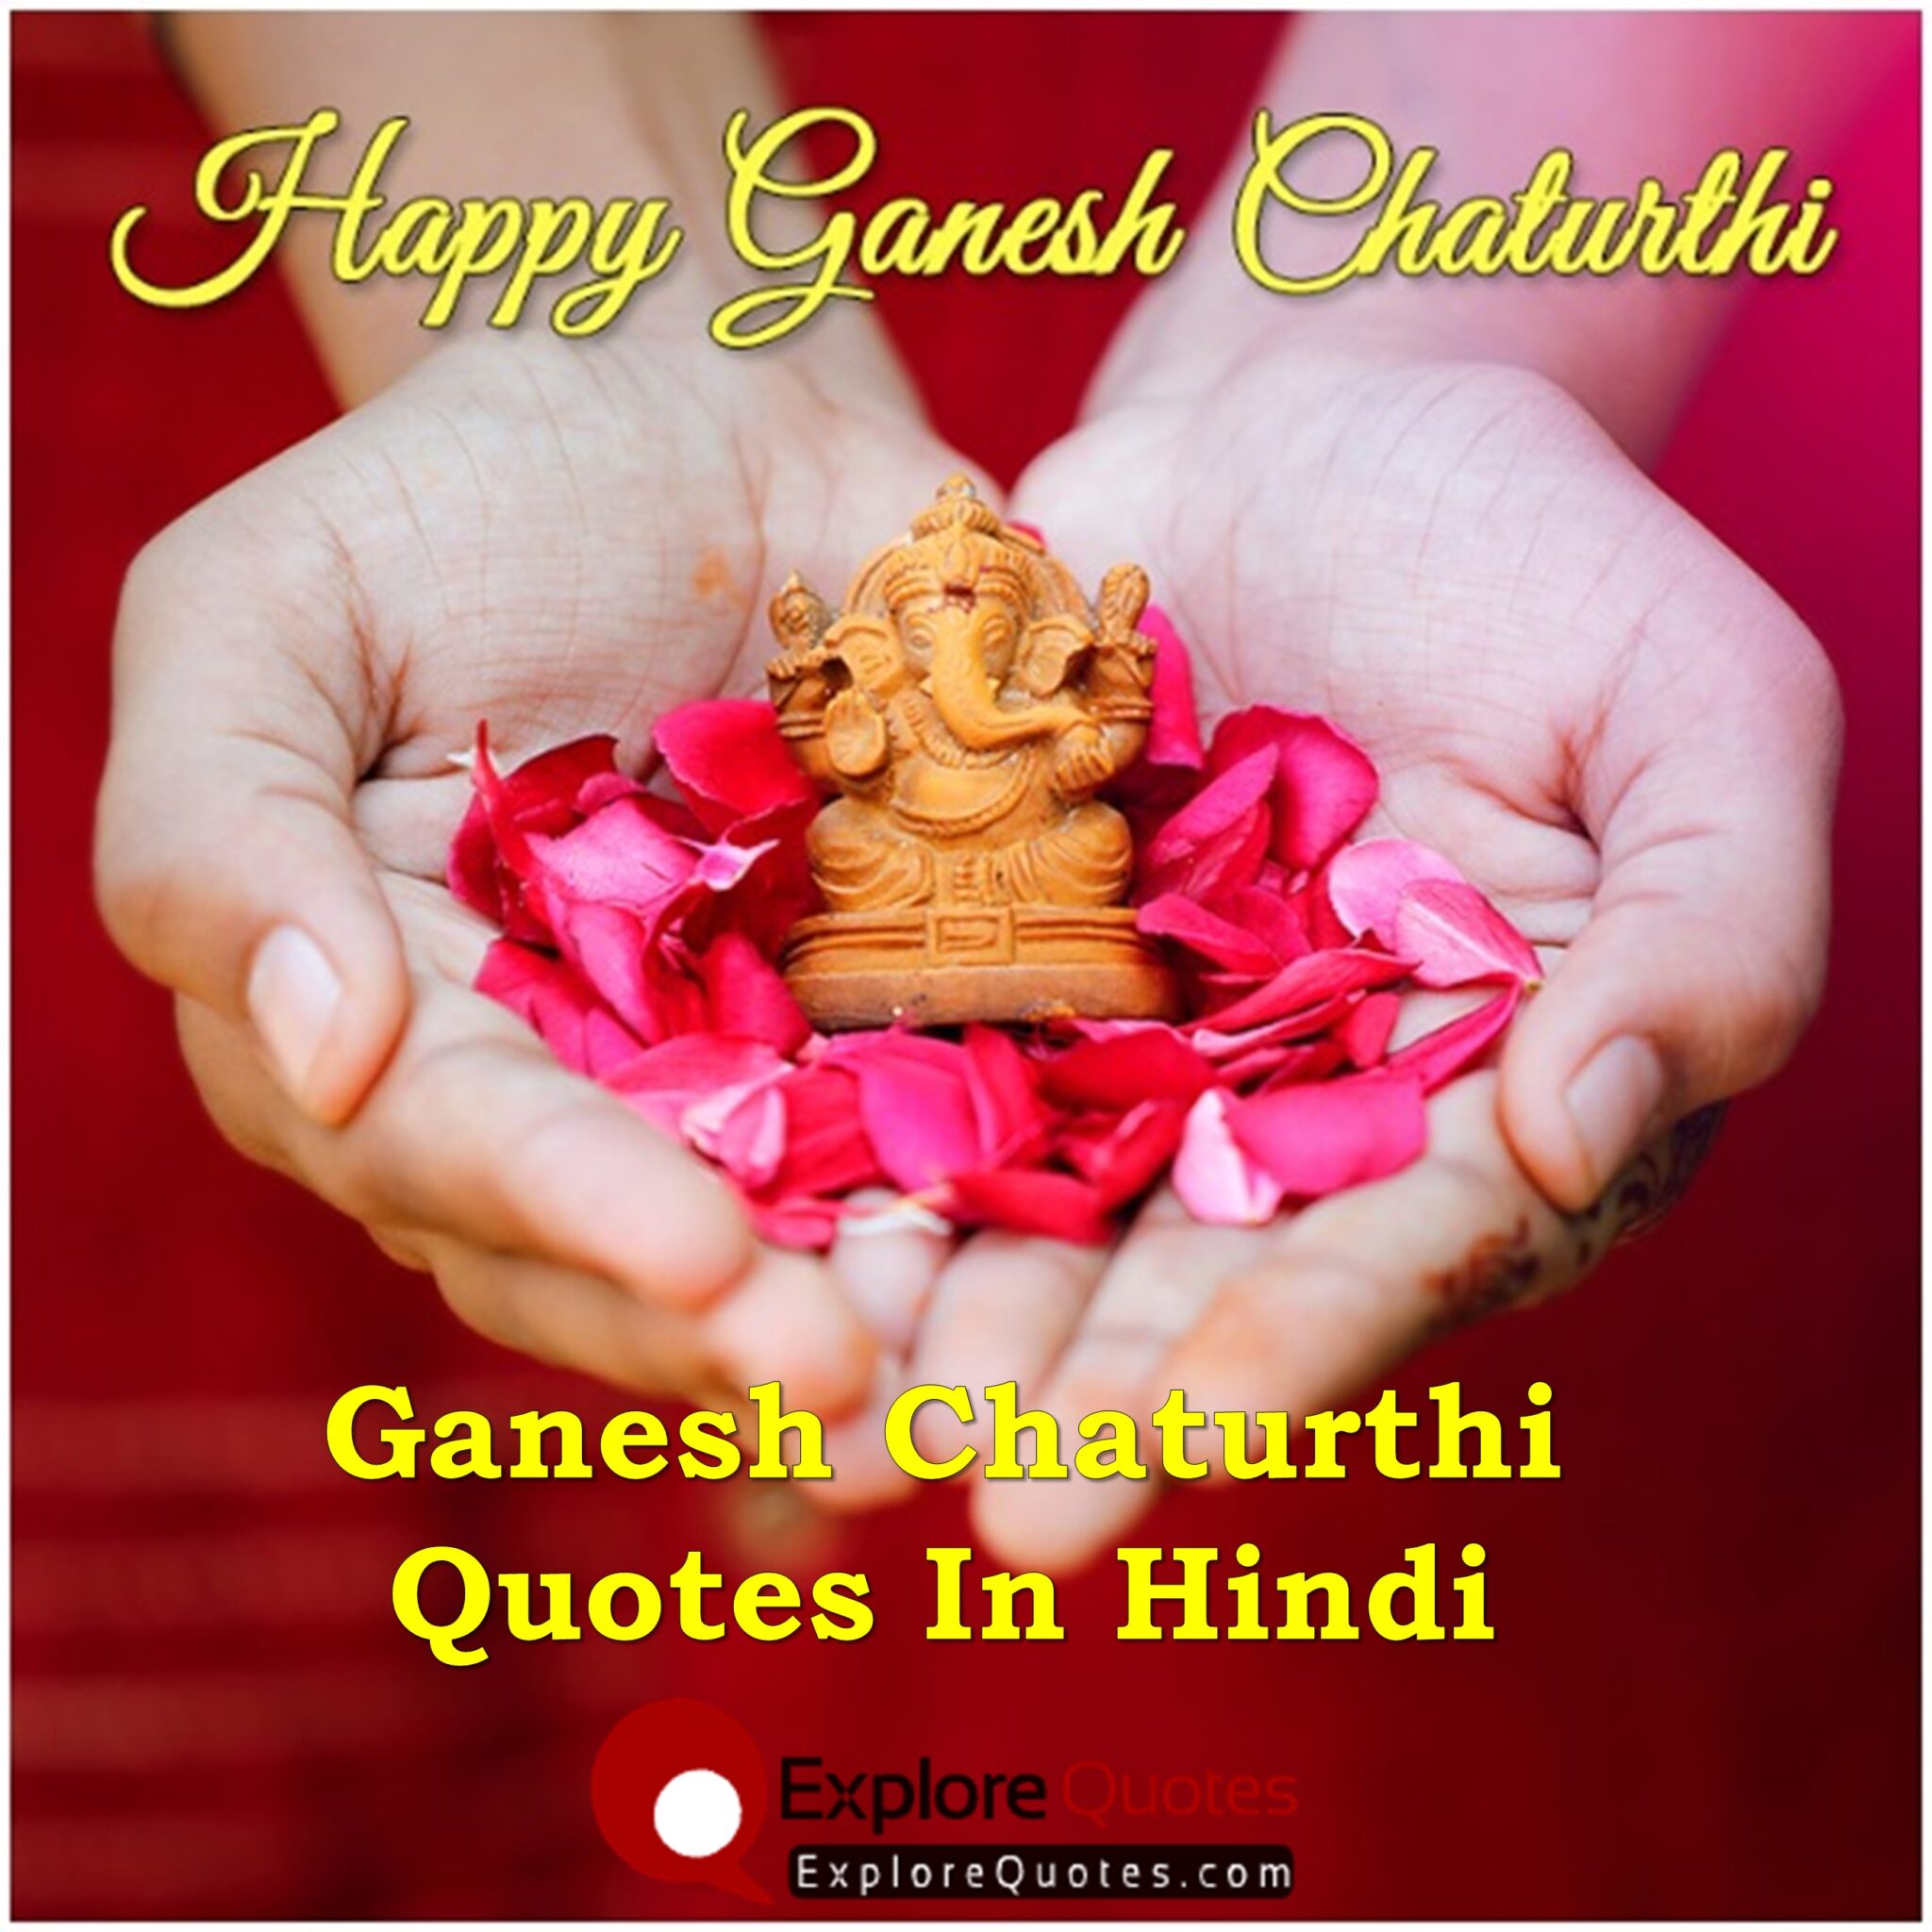 Ganesh Chaturthi Quotes In Hindi | Ganesh Chaturthi | Explore Quotes